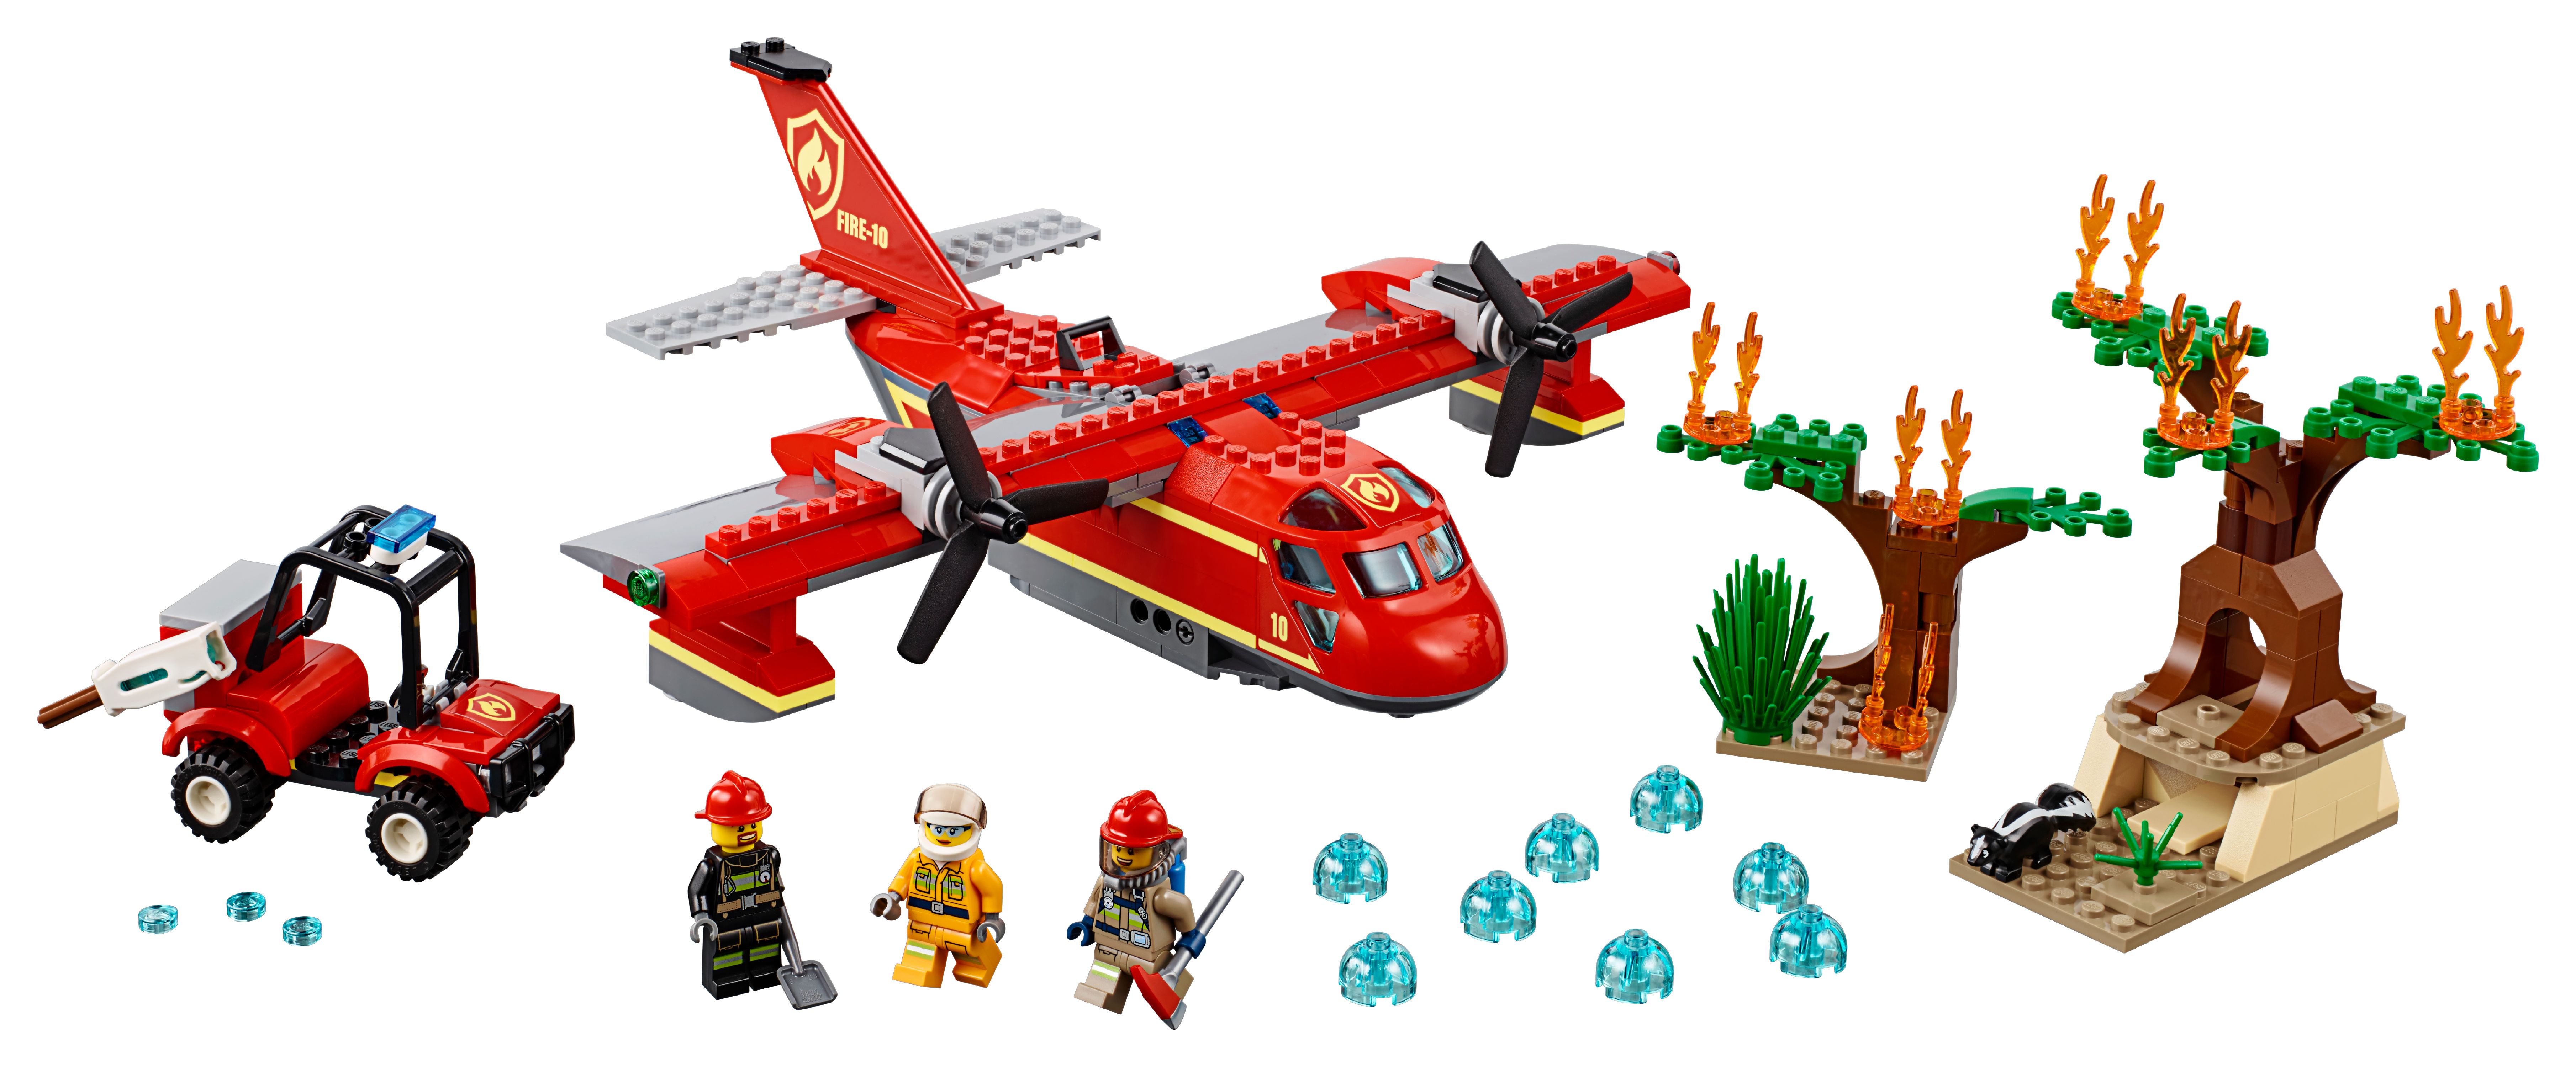 LEGO City Fire Plane 60217 Rescue Plane Building Set - image 3 of 8